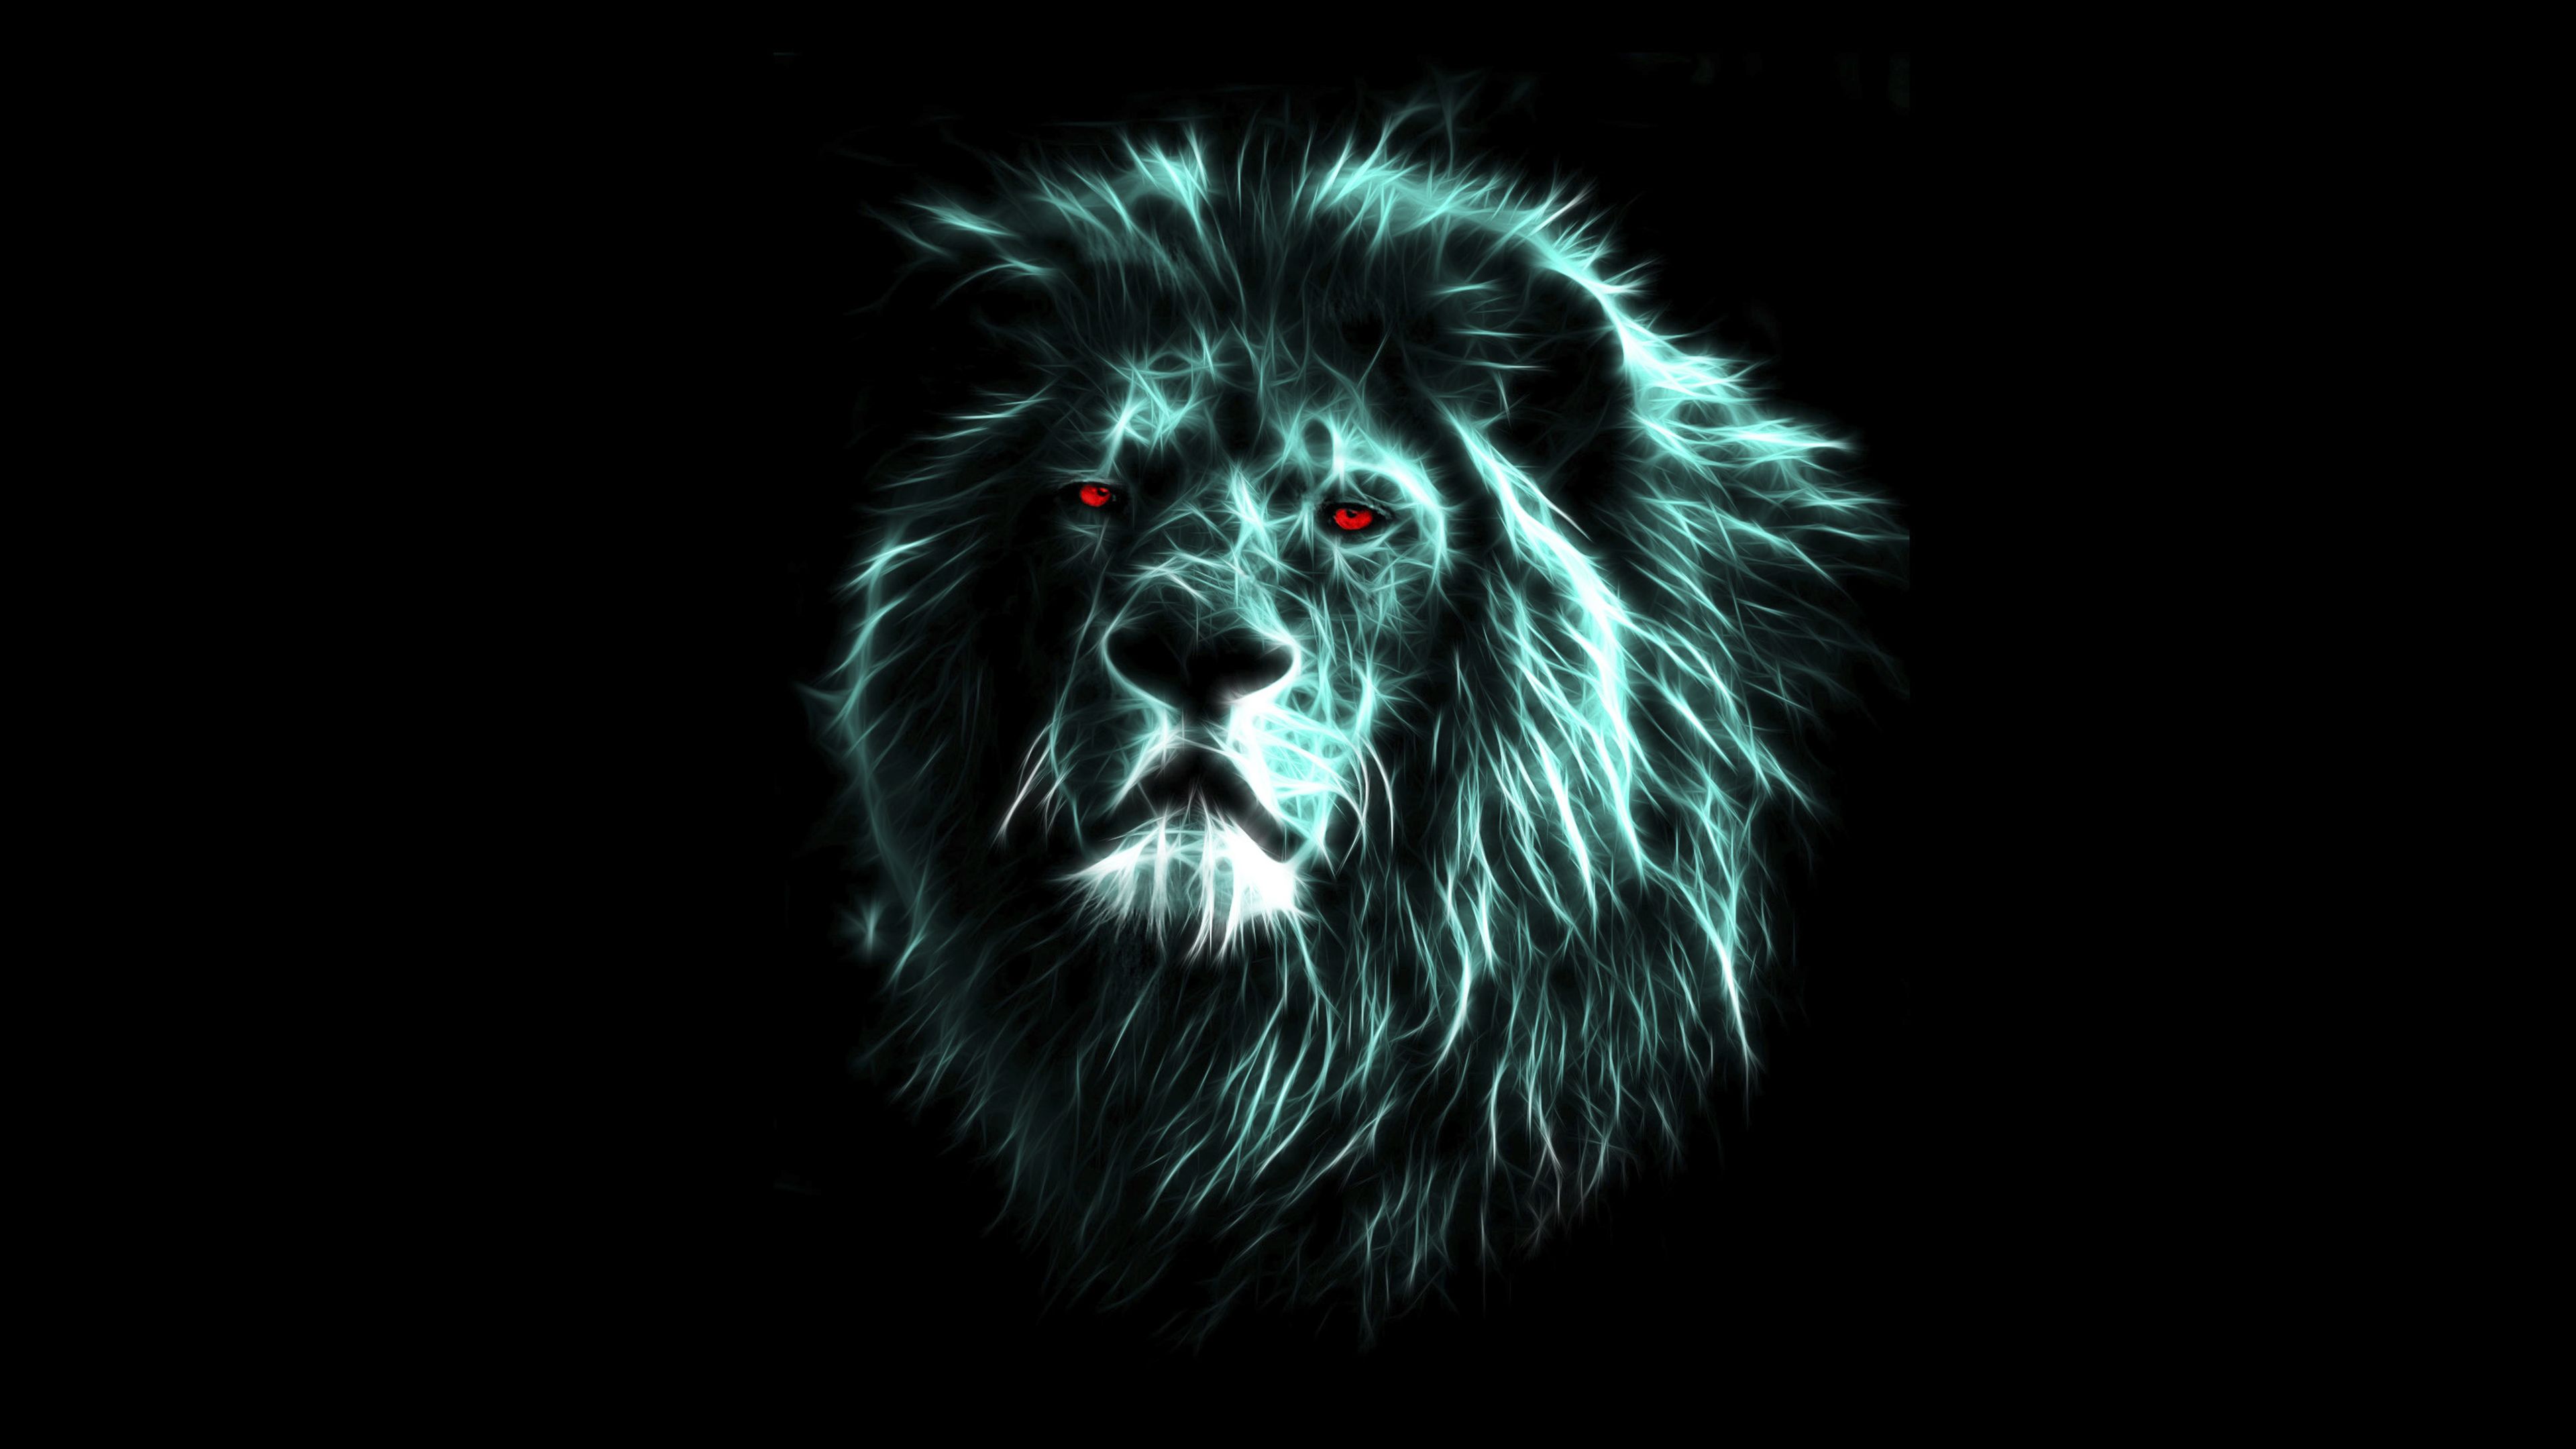 Free download Lion Wallpaper and Background Image stmednet [3840x2160] for your Desktop, Mobile & Tablet. Explore Lions Wallpaper. Lions Wallpaper, Lions Wallpaper, White Lions Wallpaper